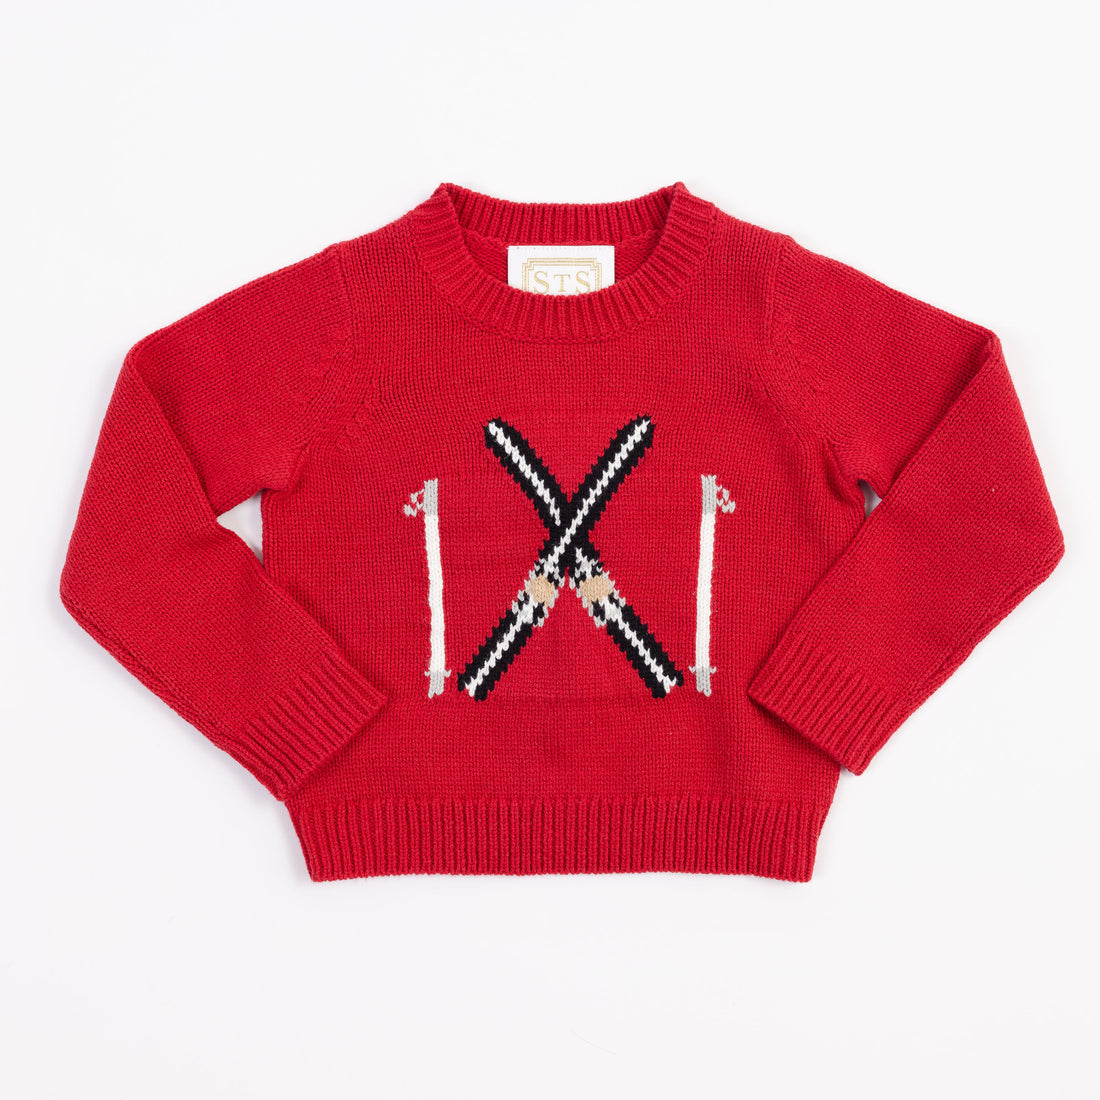 Red Kids Crossed Skis Sweater